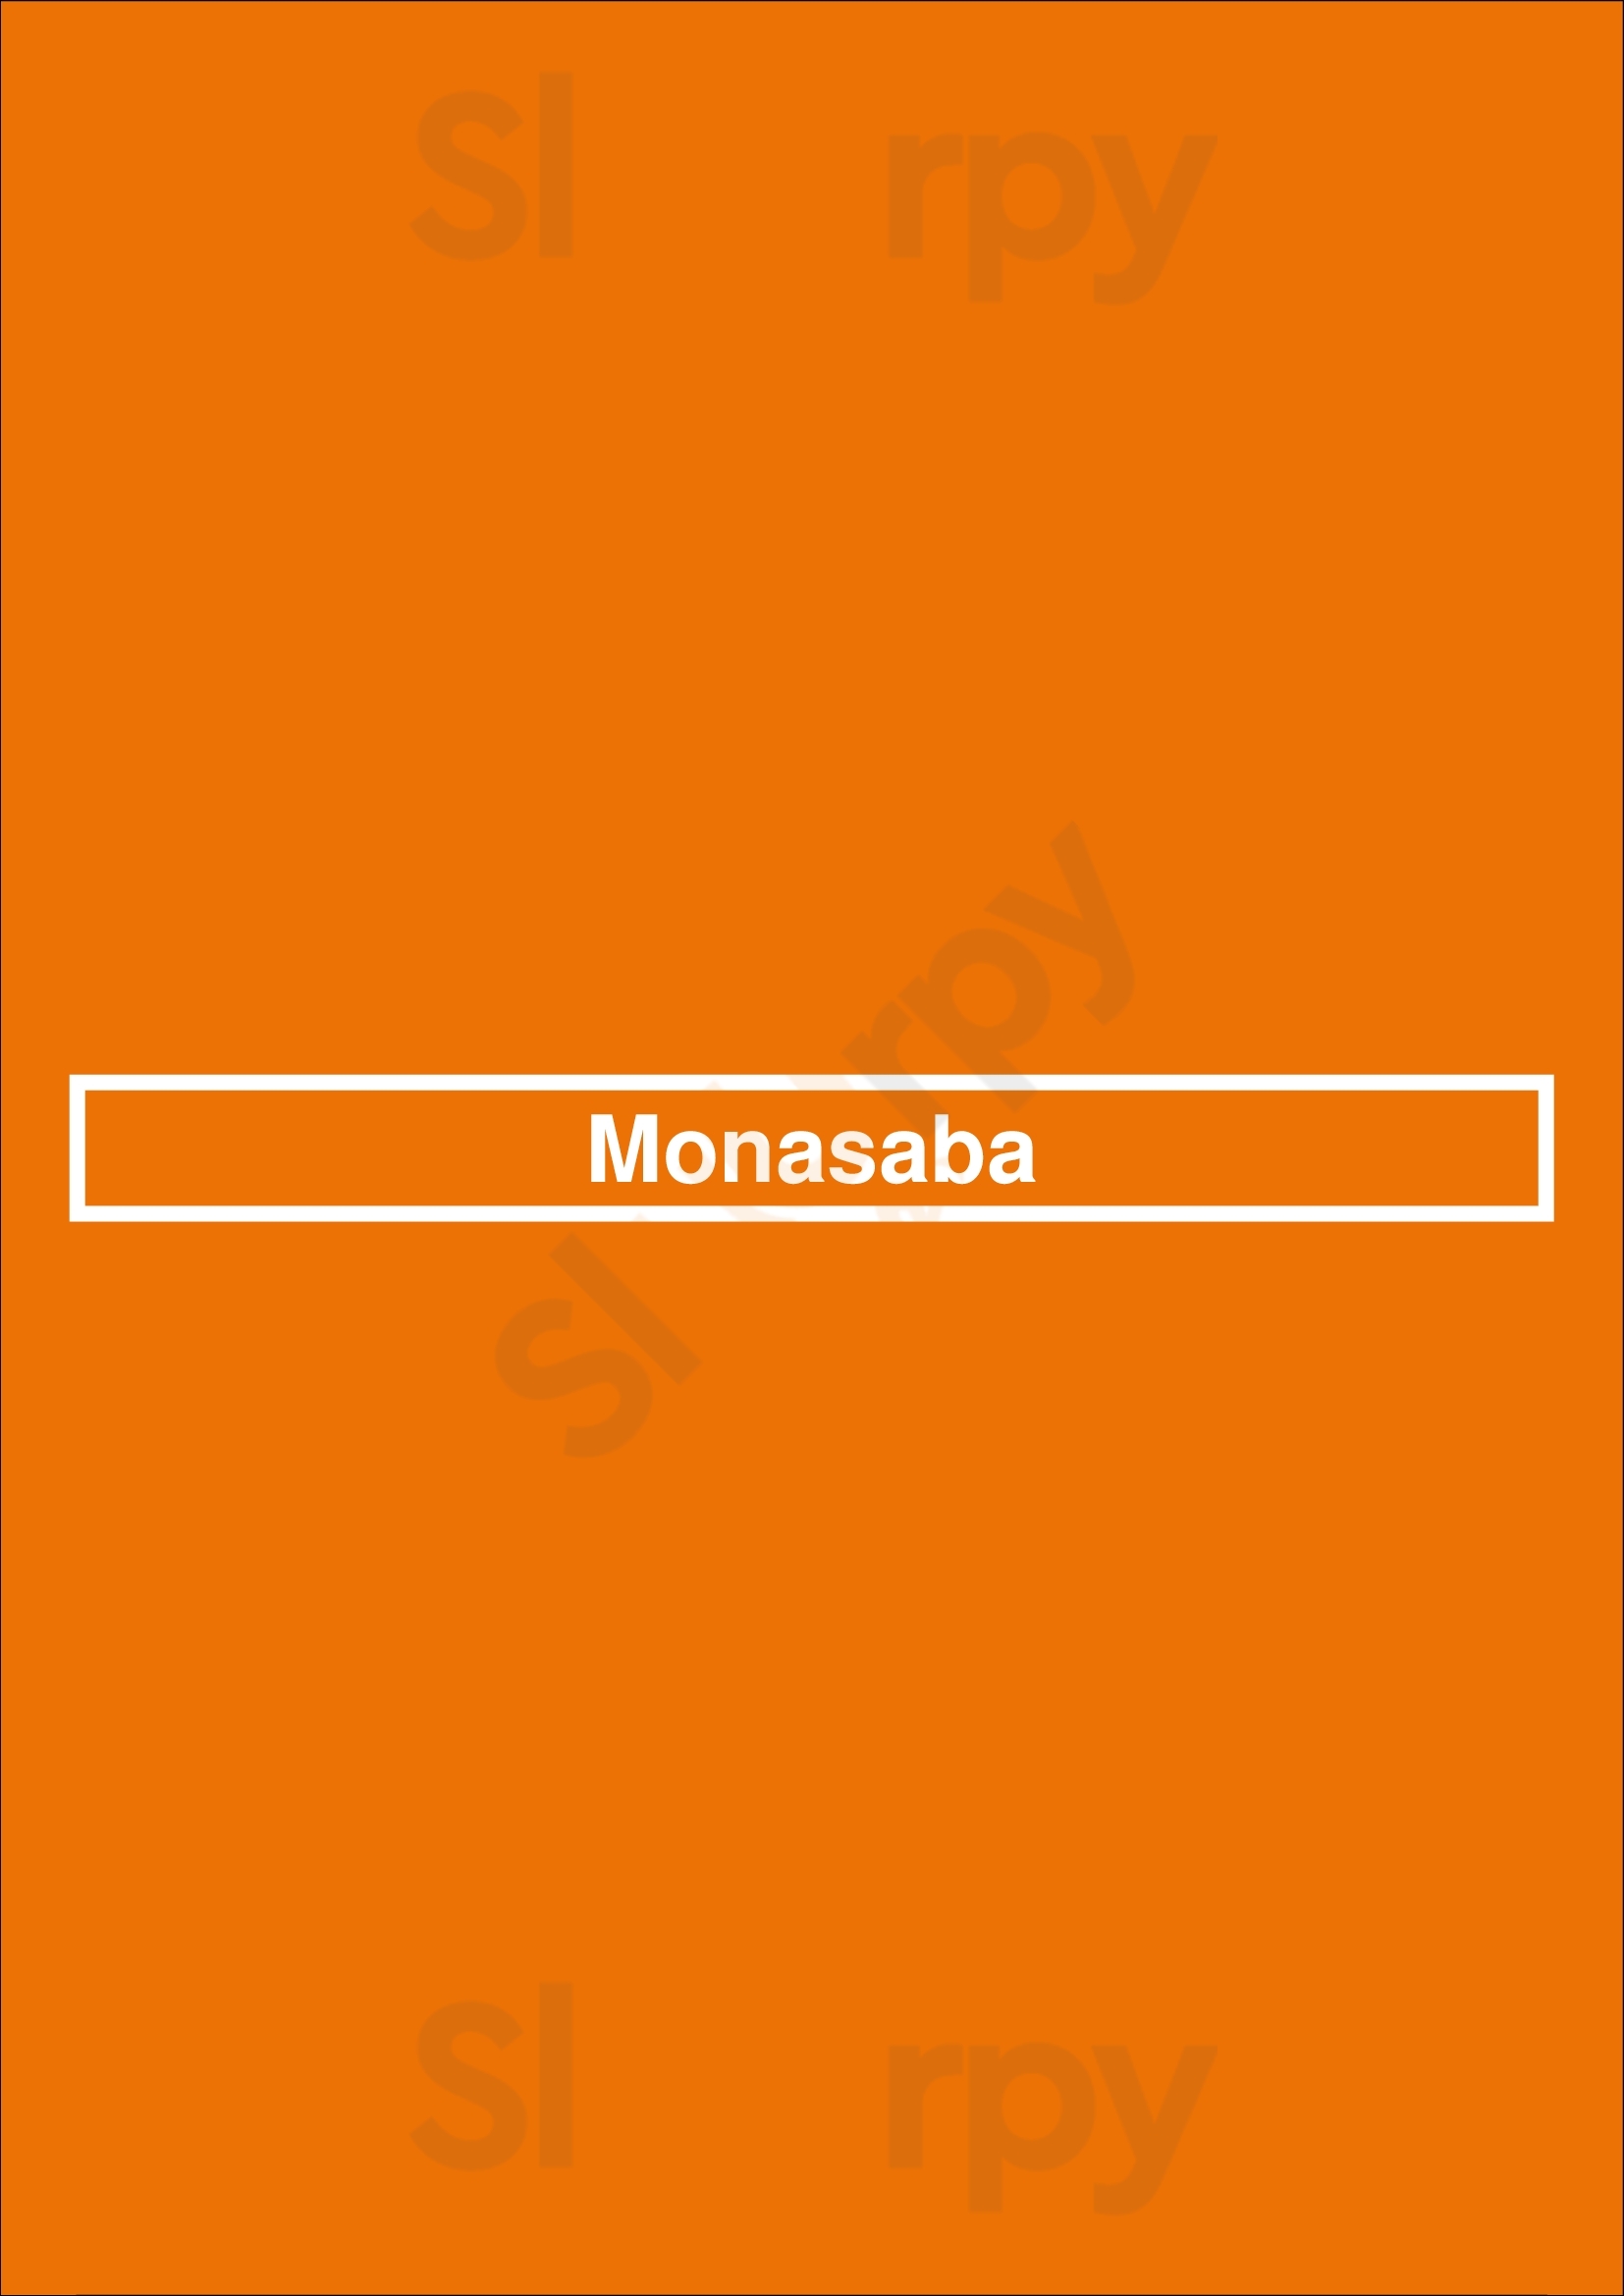 Monasaba Mississauga Menu - 1